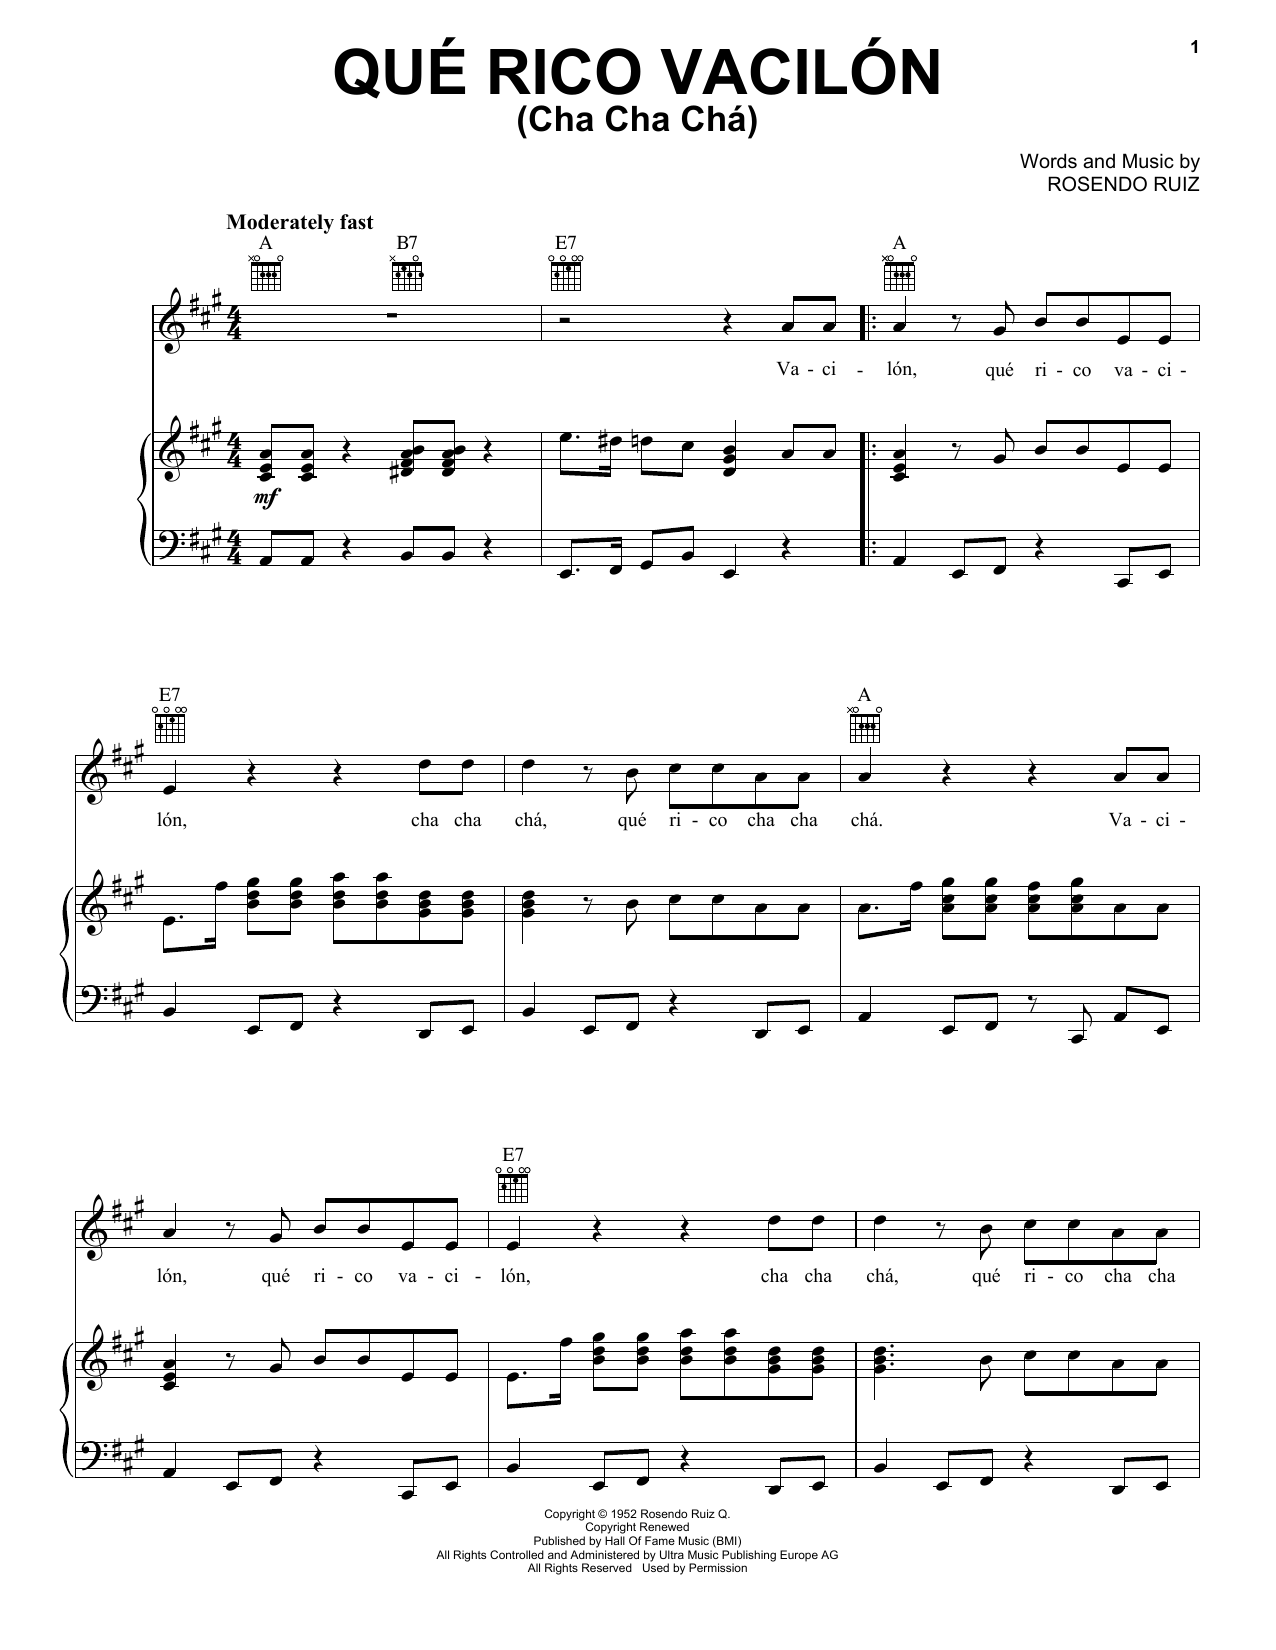 Orquesta Aragon Que Rico Vacilon (Cha Cha Cha) Sheet Music Notes & Chords for Piano, Vocal & Guitar (Right-Hand Melody) - Download or Print PDF